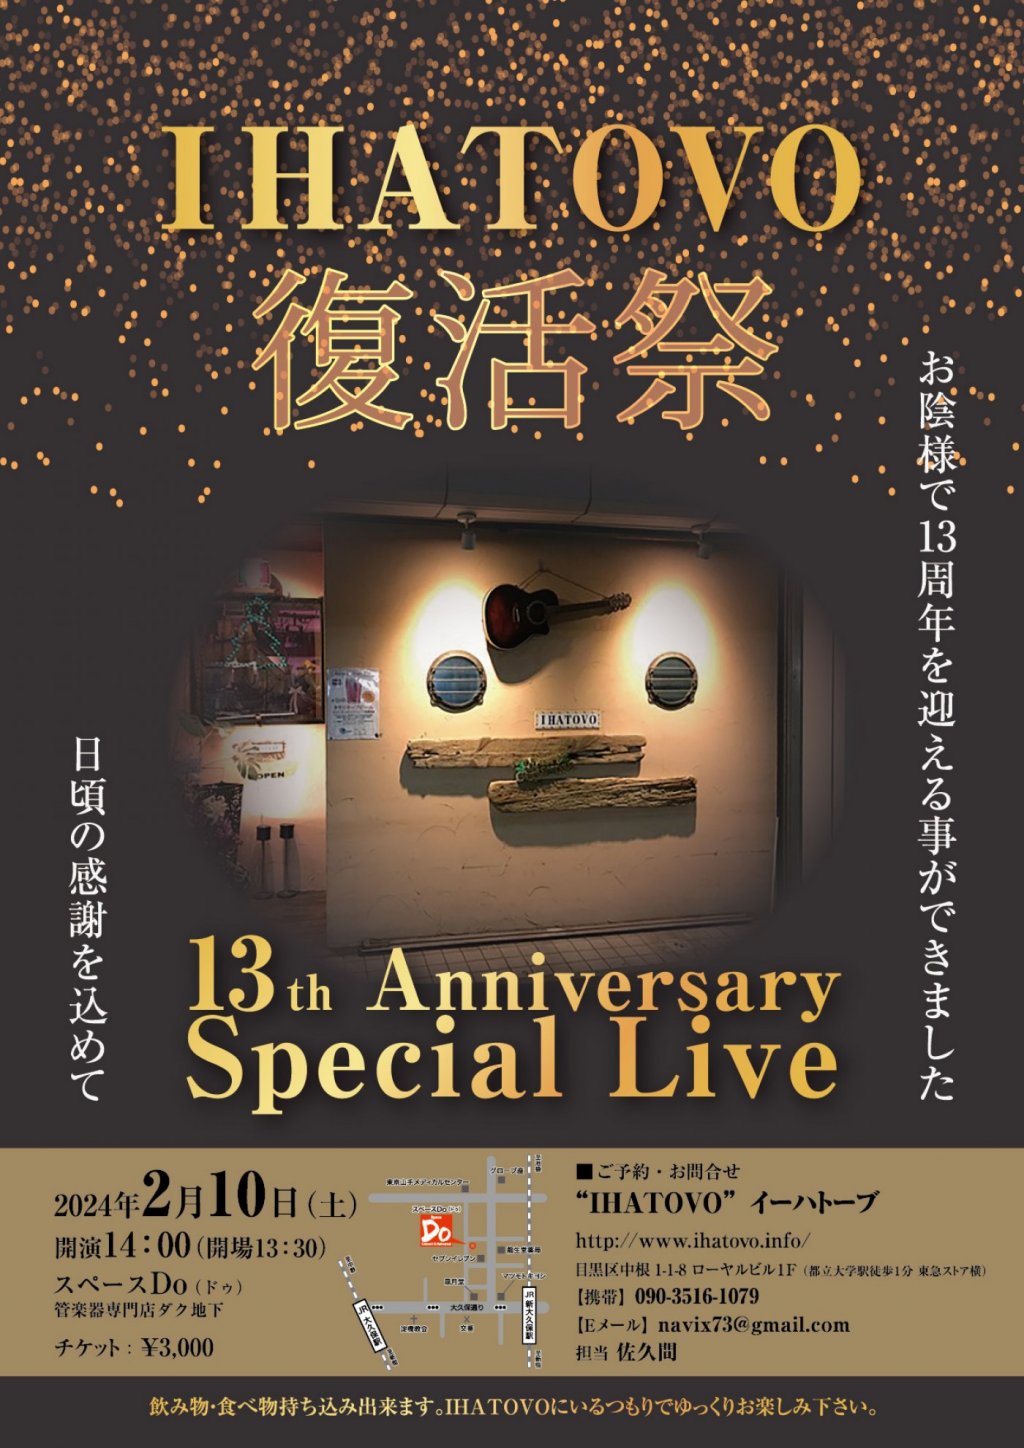 IHATOVO 復活祭 13th Anniversary Special Live